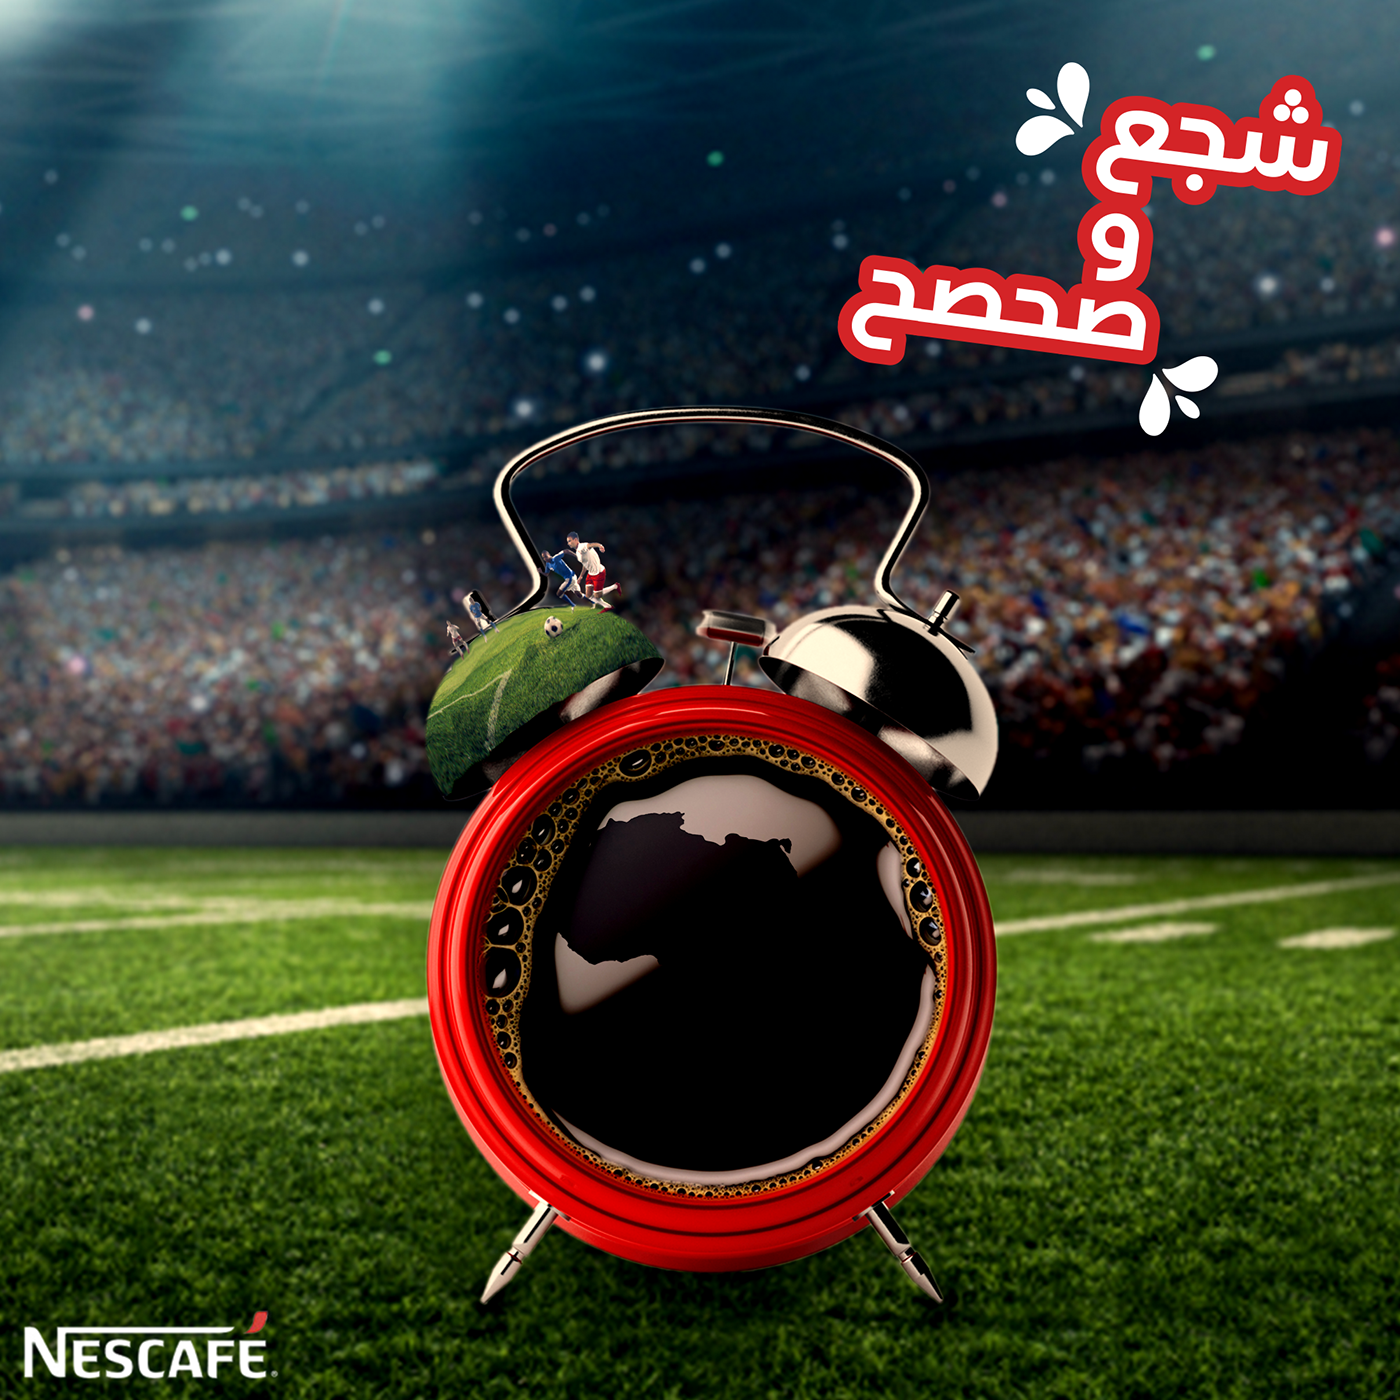 #nescafe football ads Socialmedia afcon19 egypt FIFA